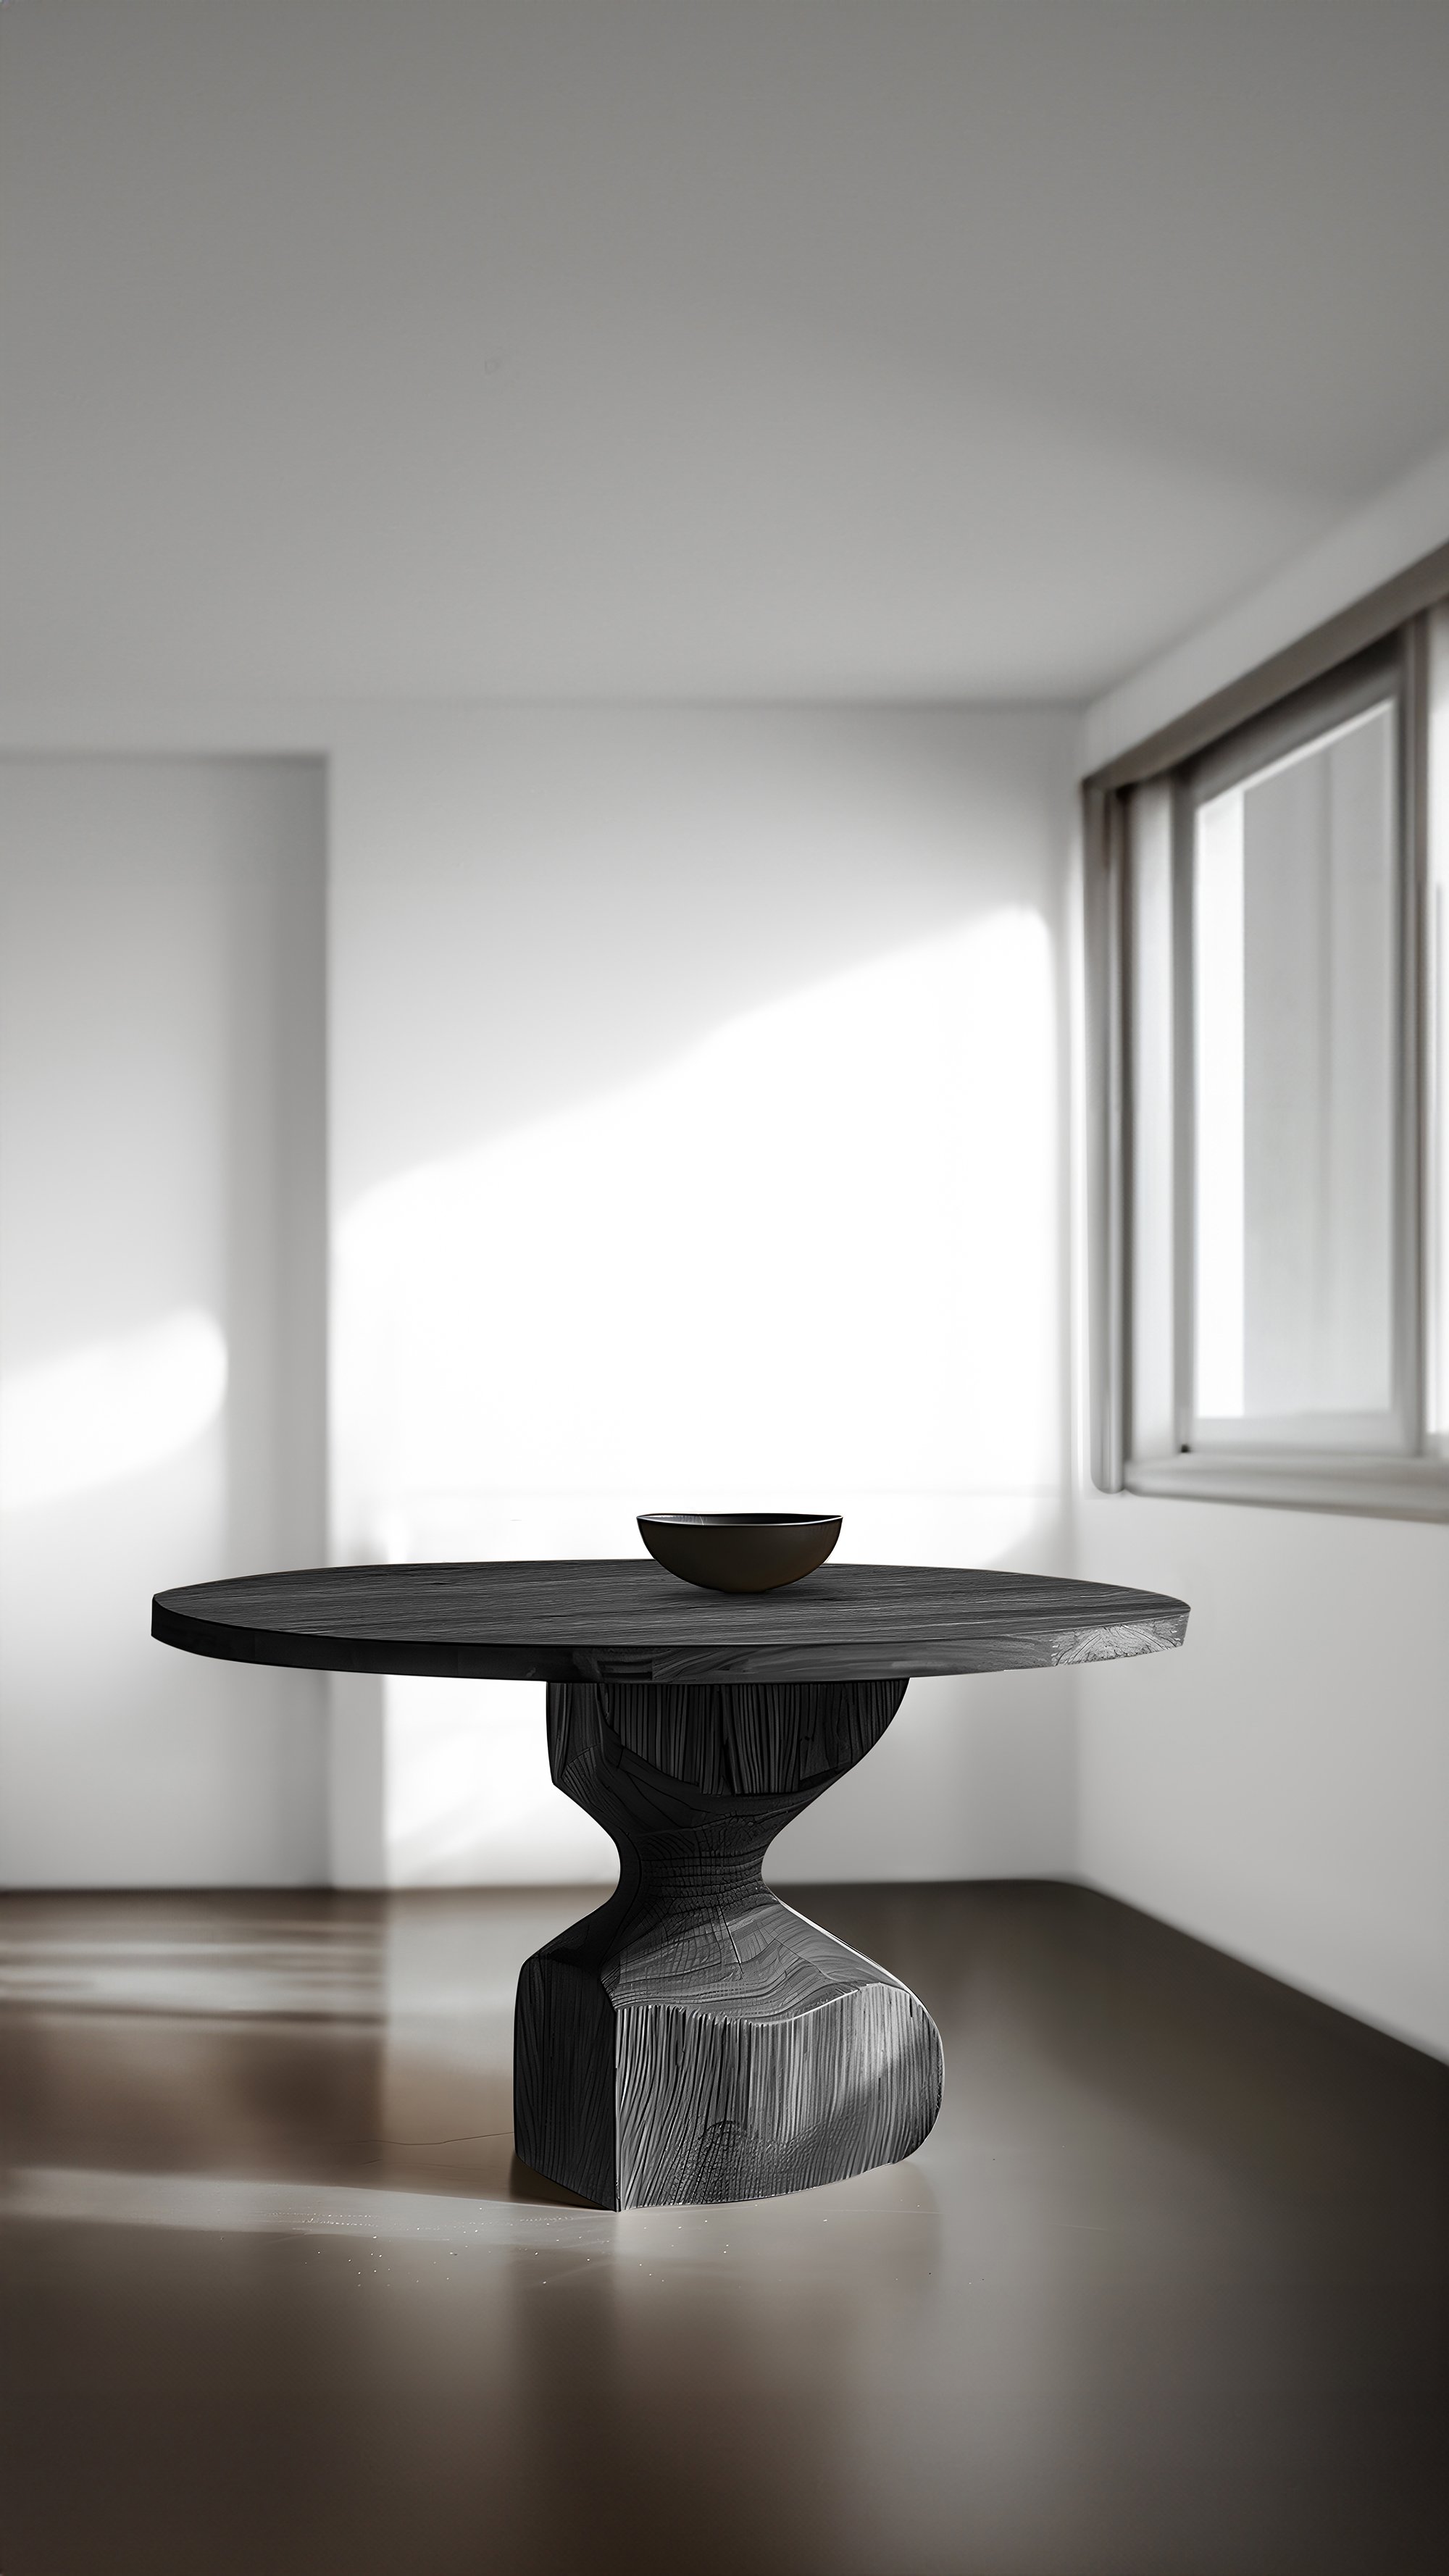 Socle Console Tables, Sleek Design in Black Wood by Joel Escalona No24 7.jpg